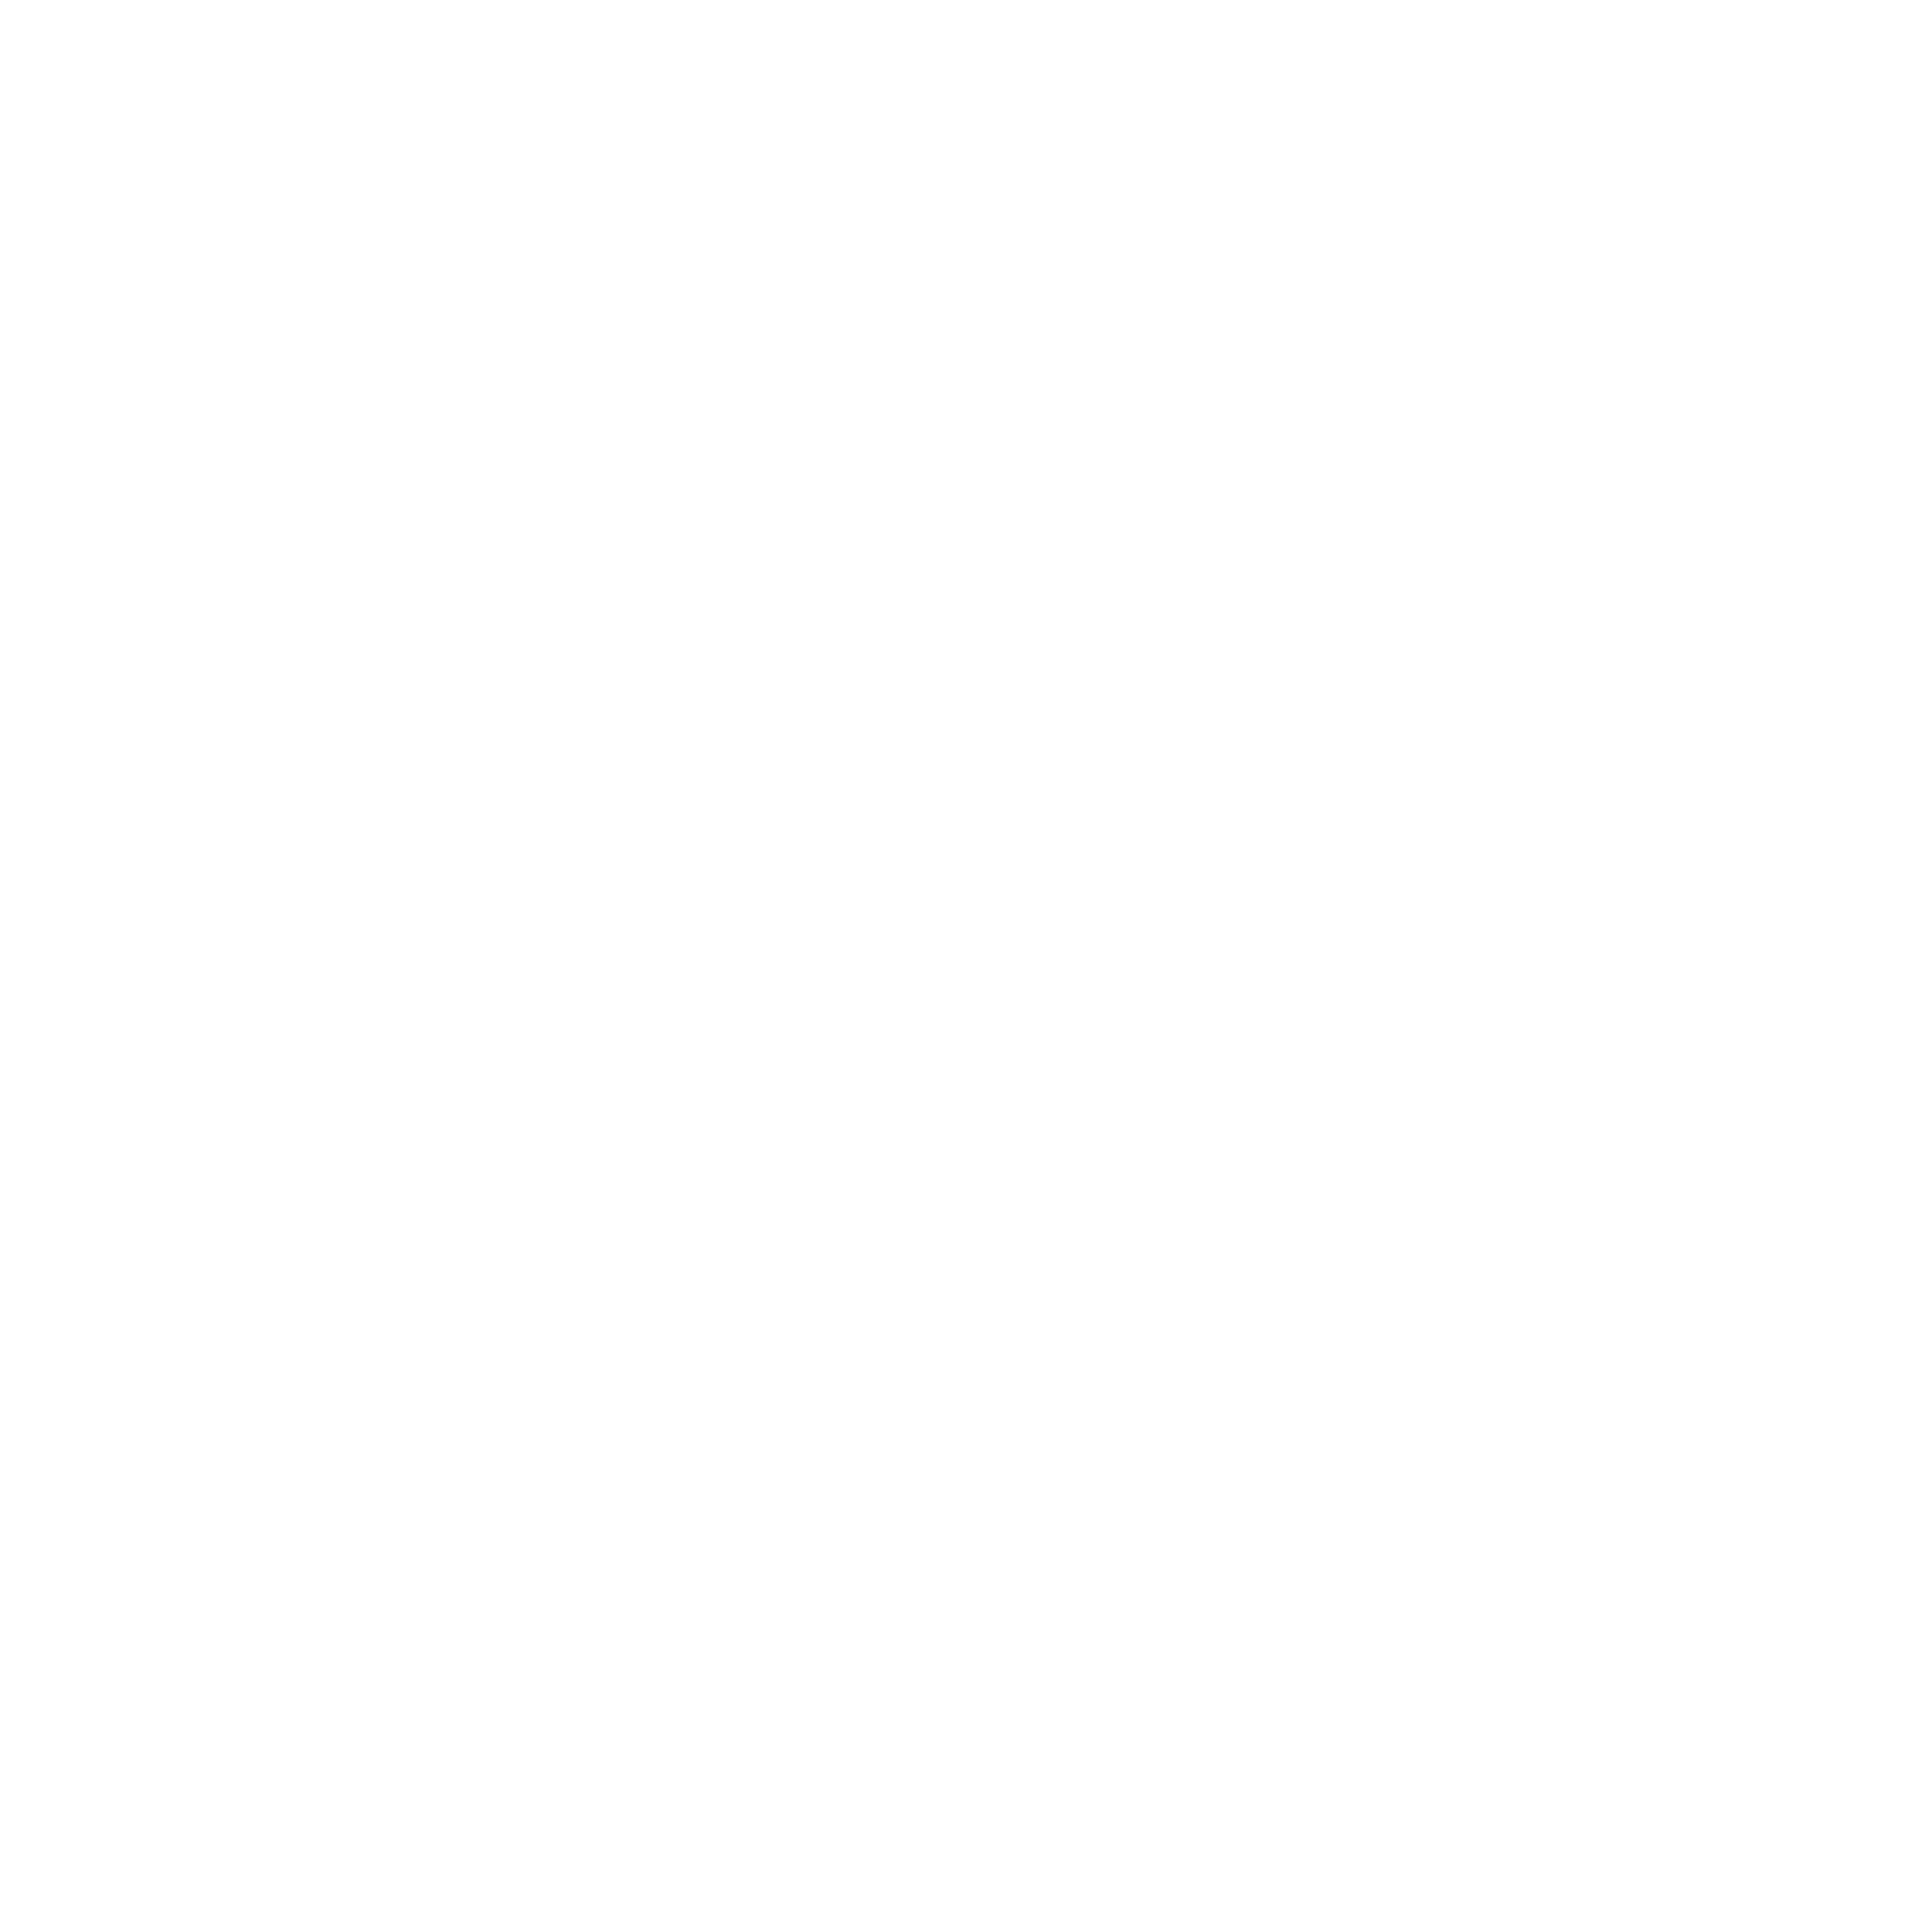 Hart-logos-black-trans15.png